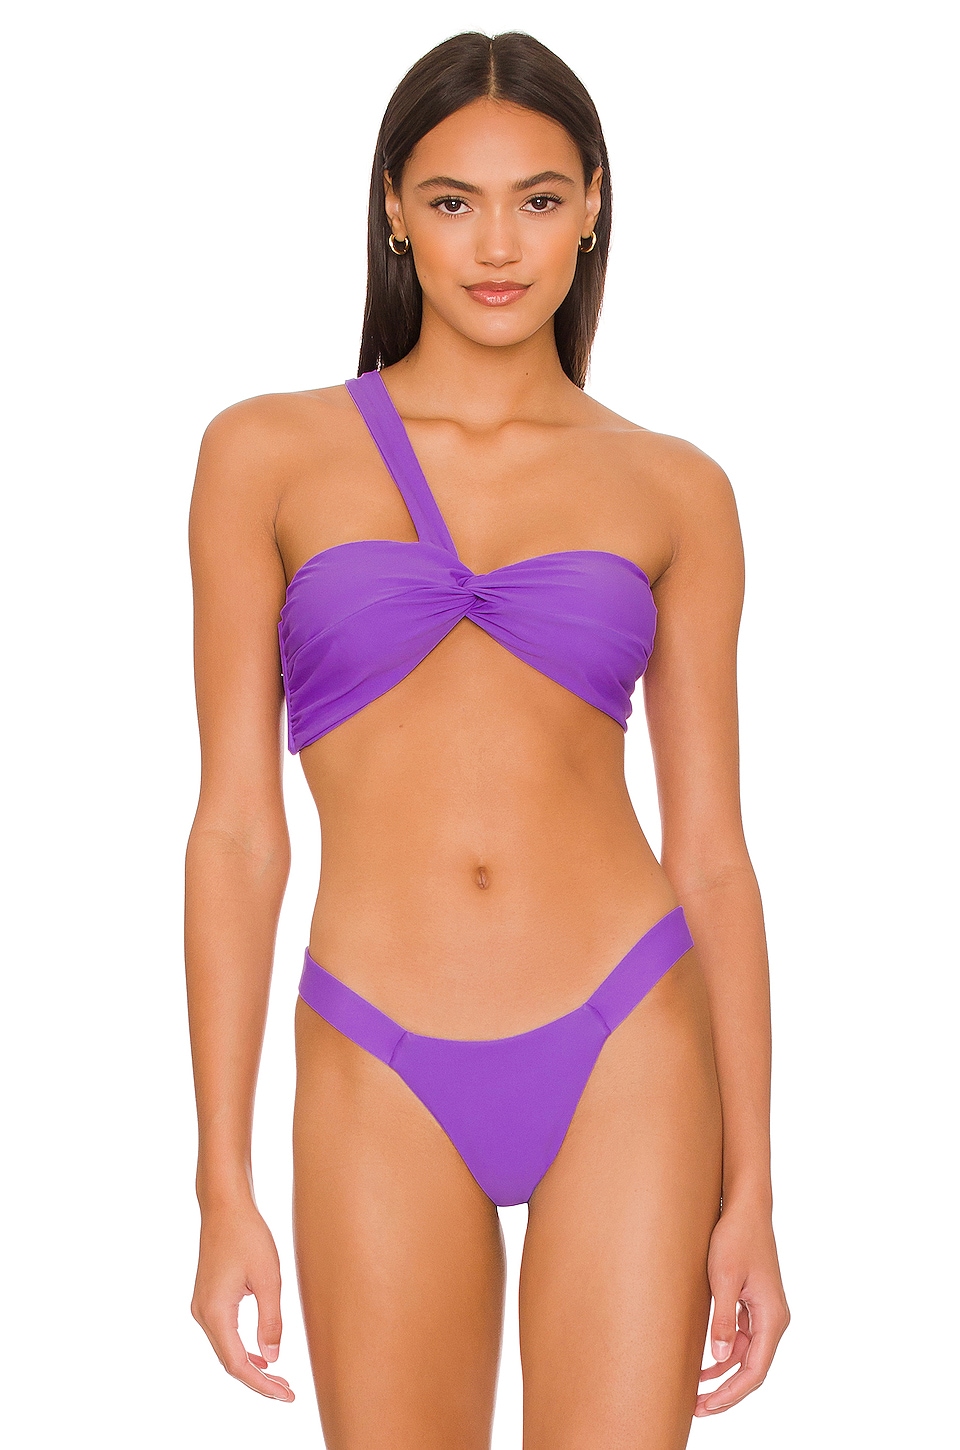 Frankies Bikinis Nick Shine Bikini Top in Candied Violet